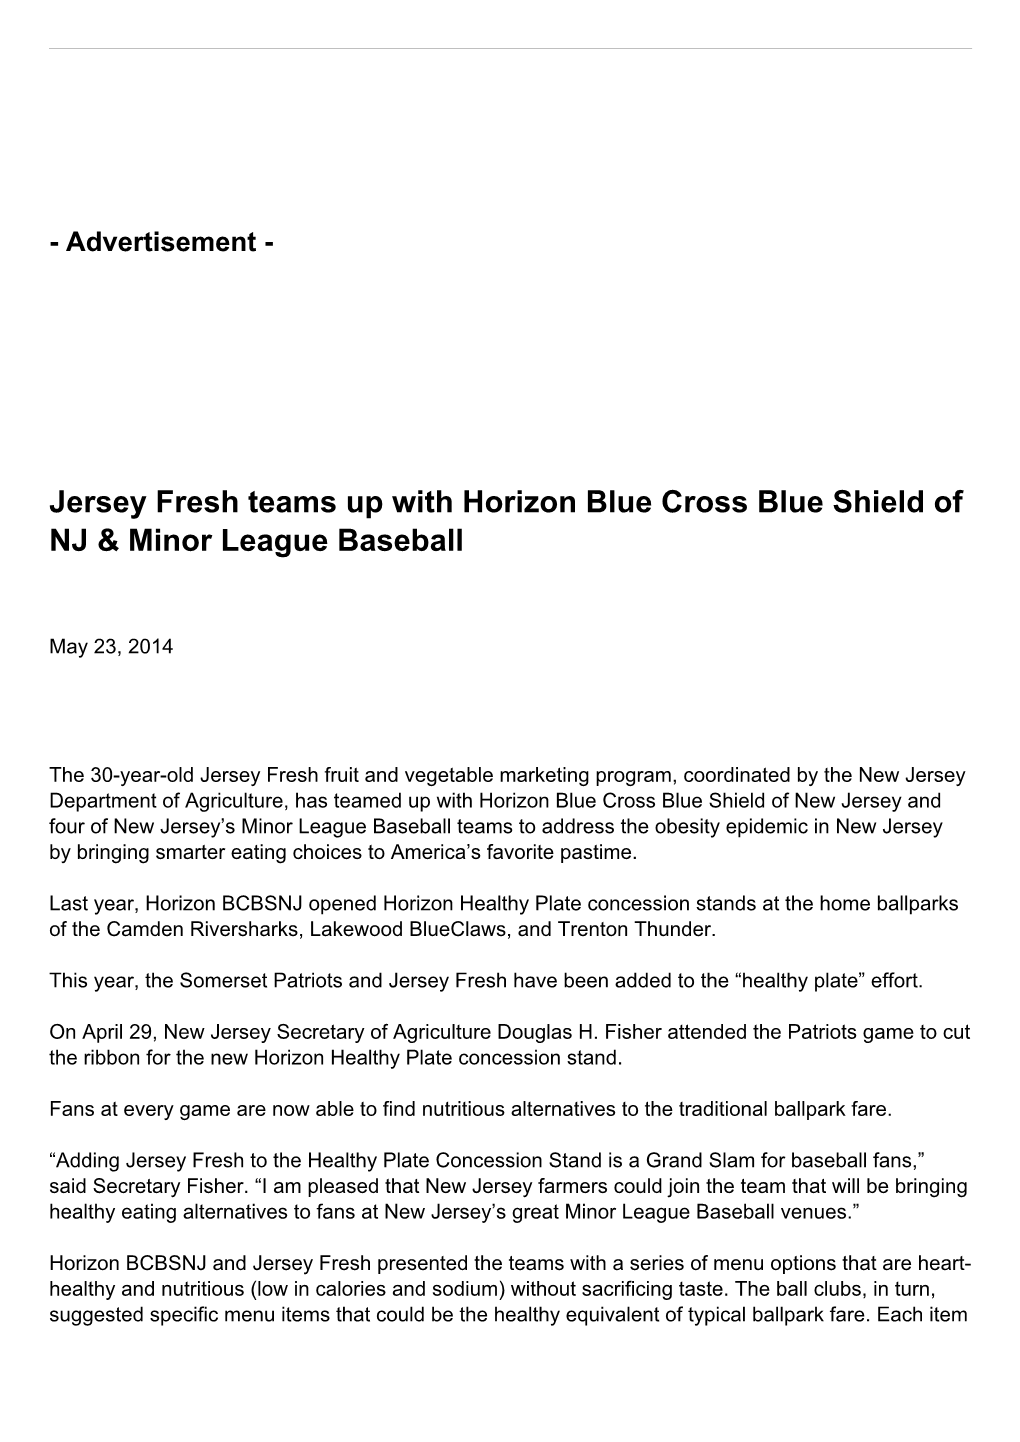 Jersey Fresh Teams up with Horizon Blue Cross Blue Shield of NJ & Minor League Baseball